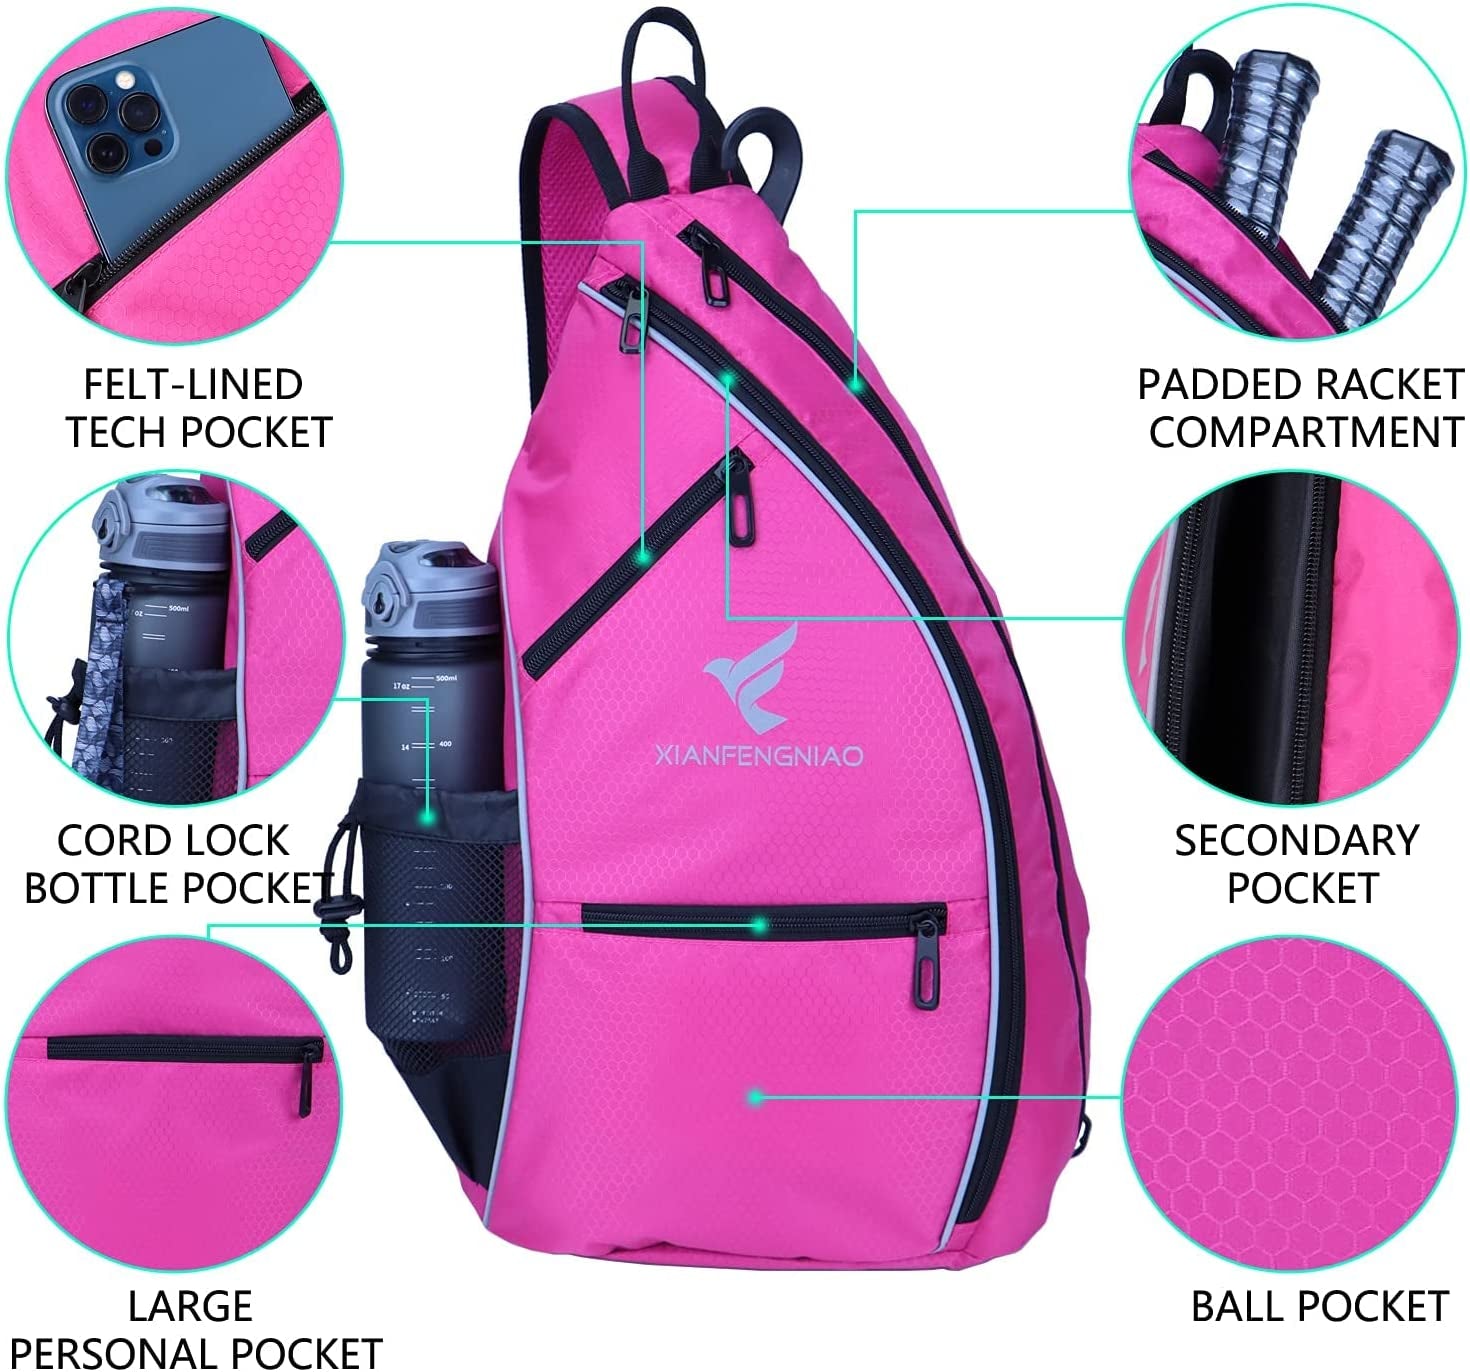 Athletico Sling Bag - Crossbody Backpack for Pickleball, Tennis, Racketball, and Travel for Men and Women (Blue)